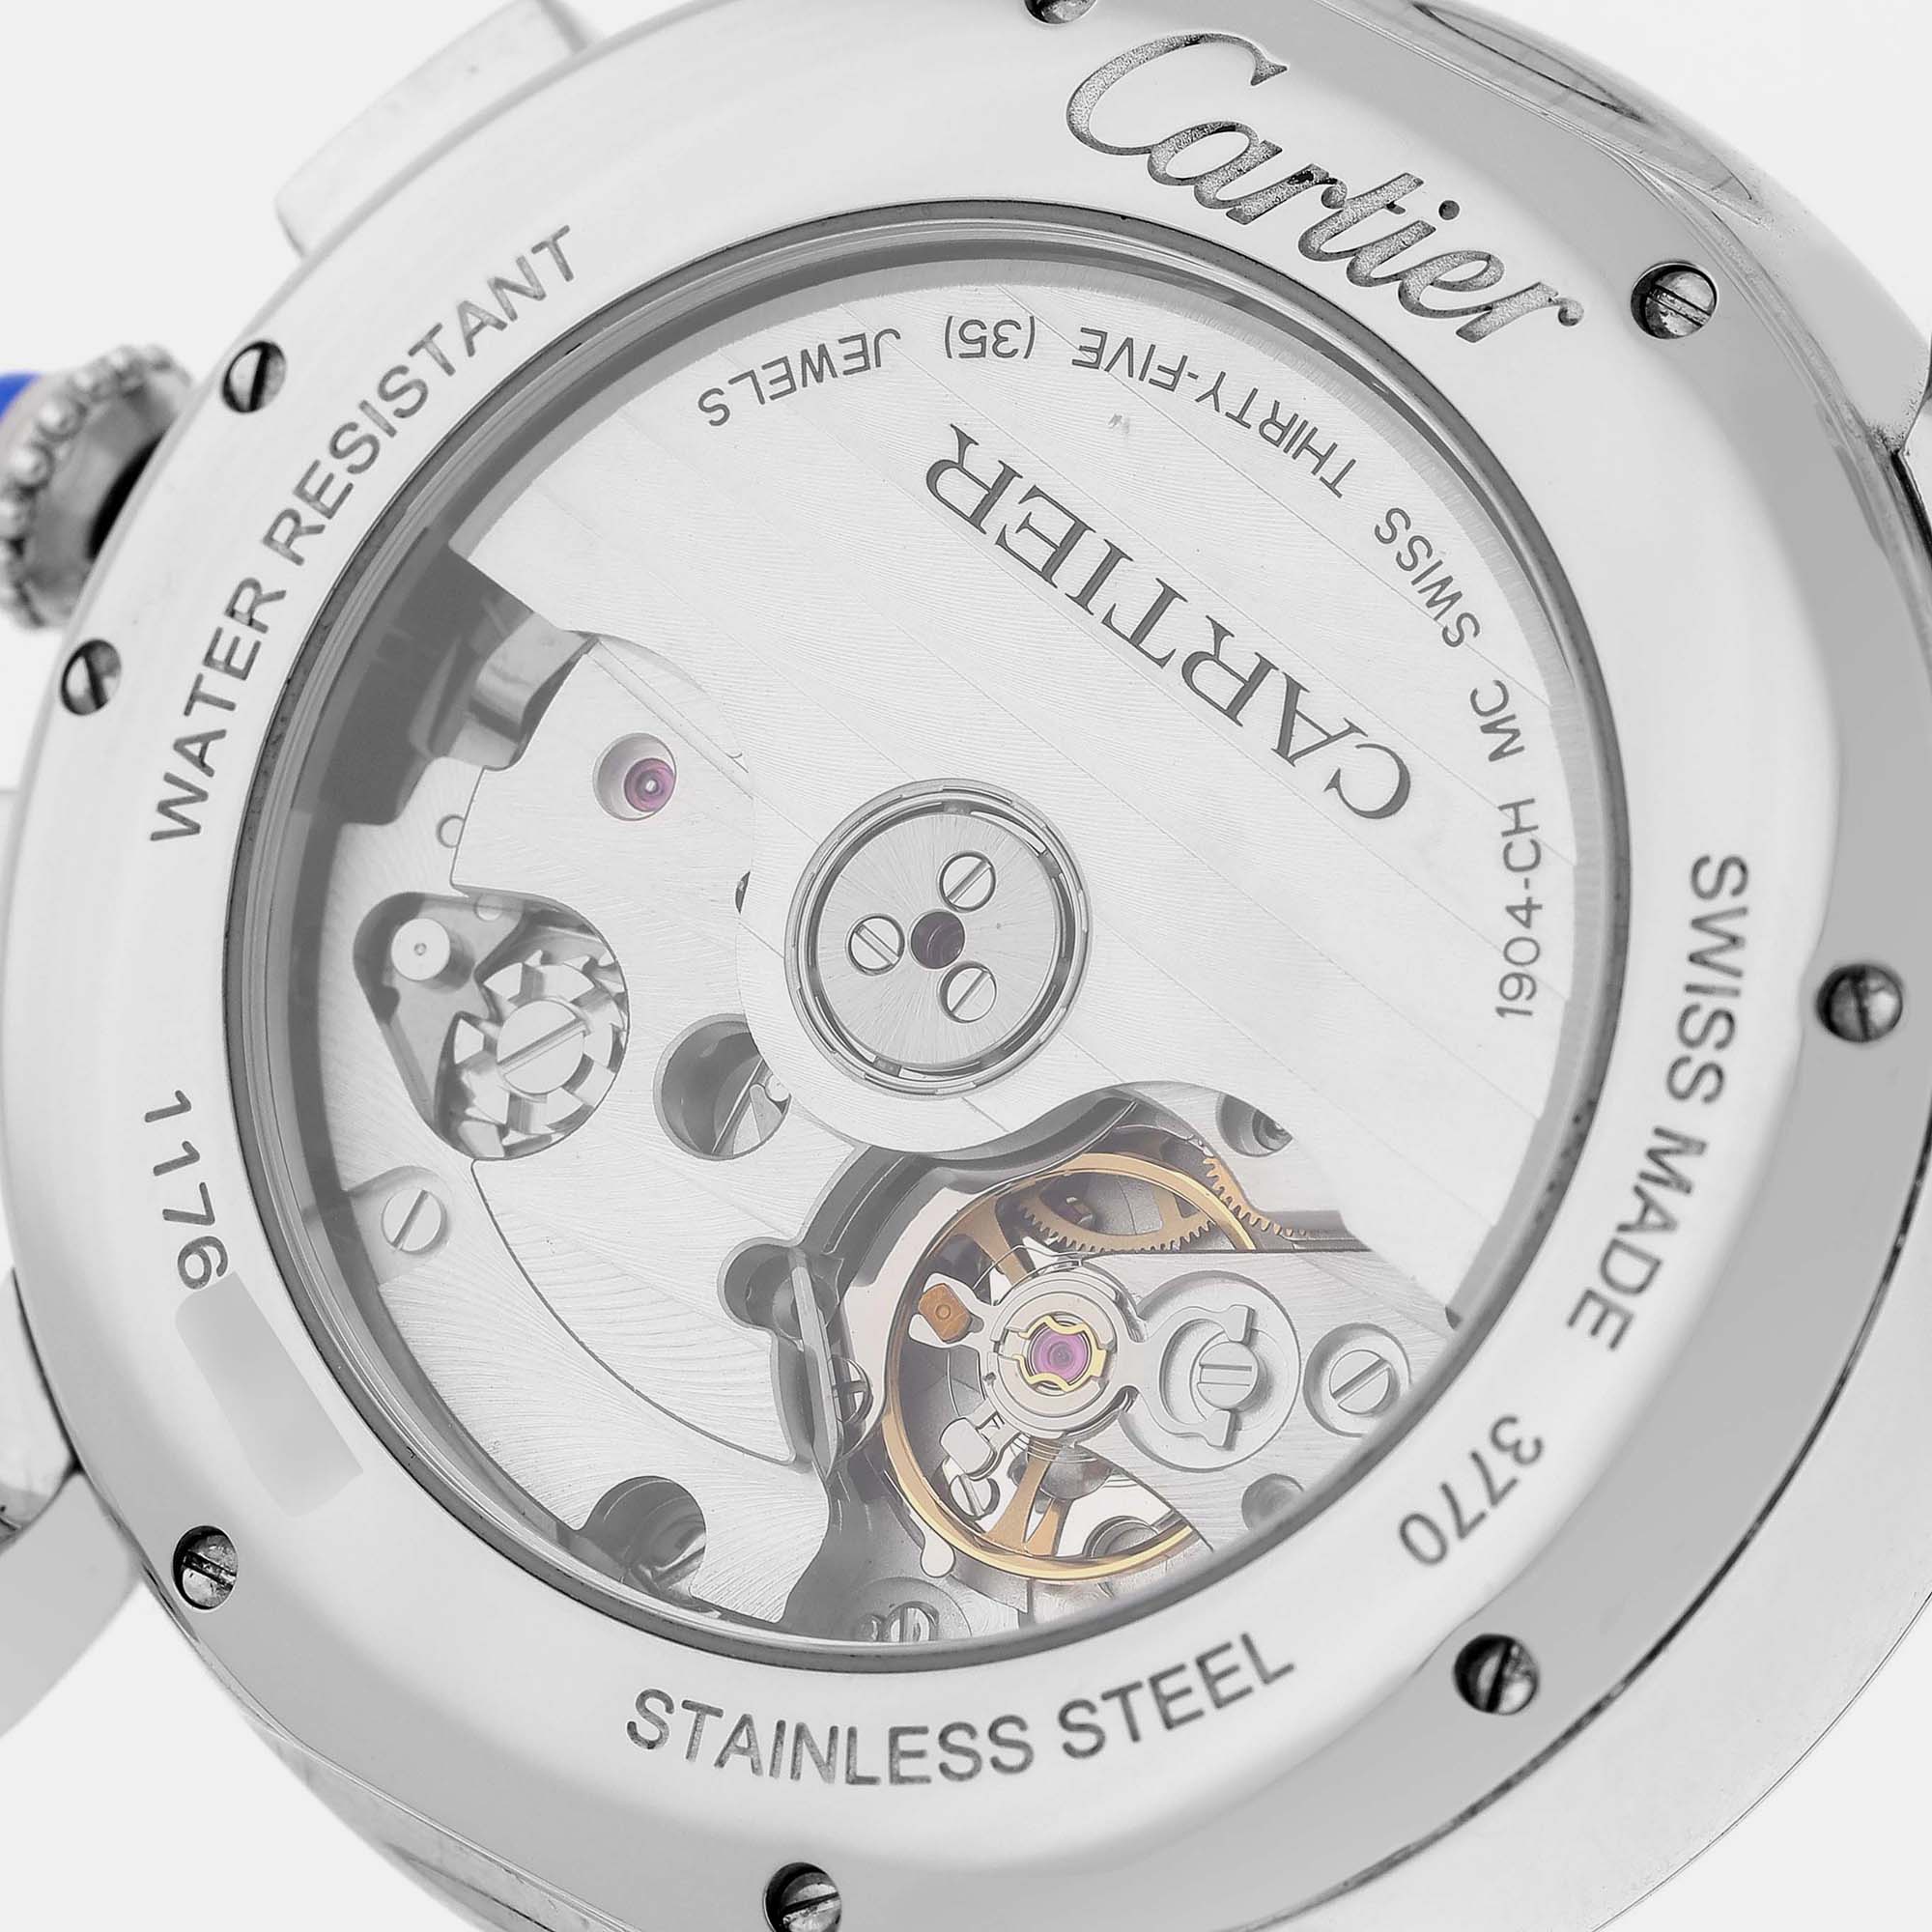 Cartier Rotonde Chronograph Silver Dial Steel Men's Watch WSRO0002 40 Mm